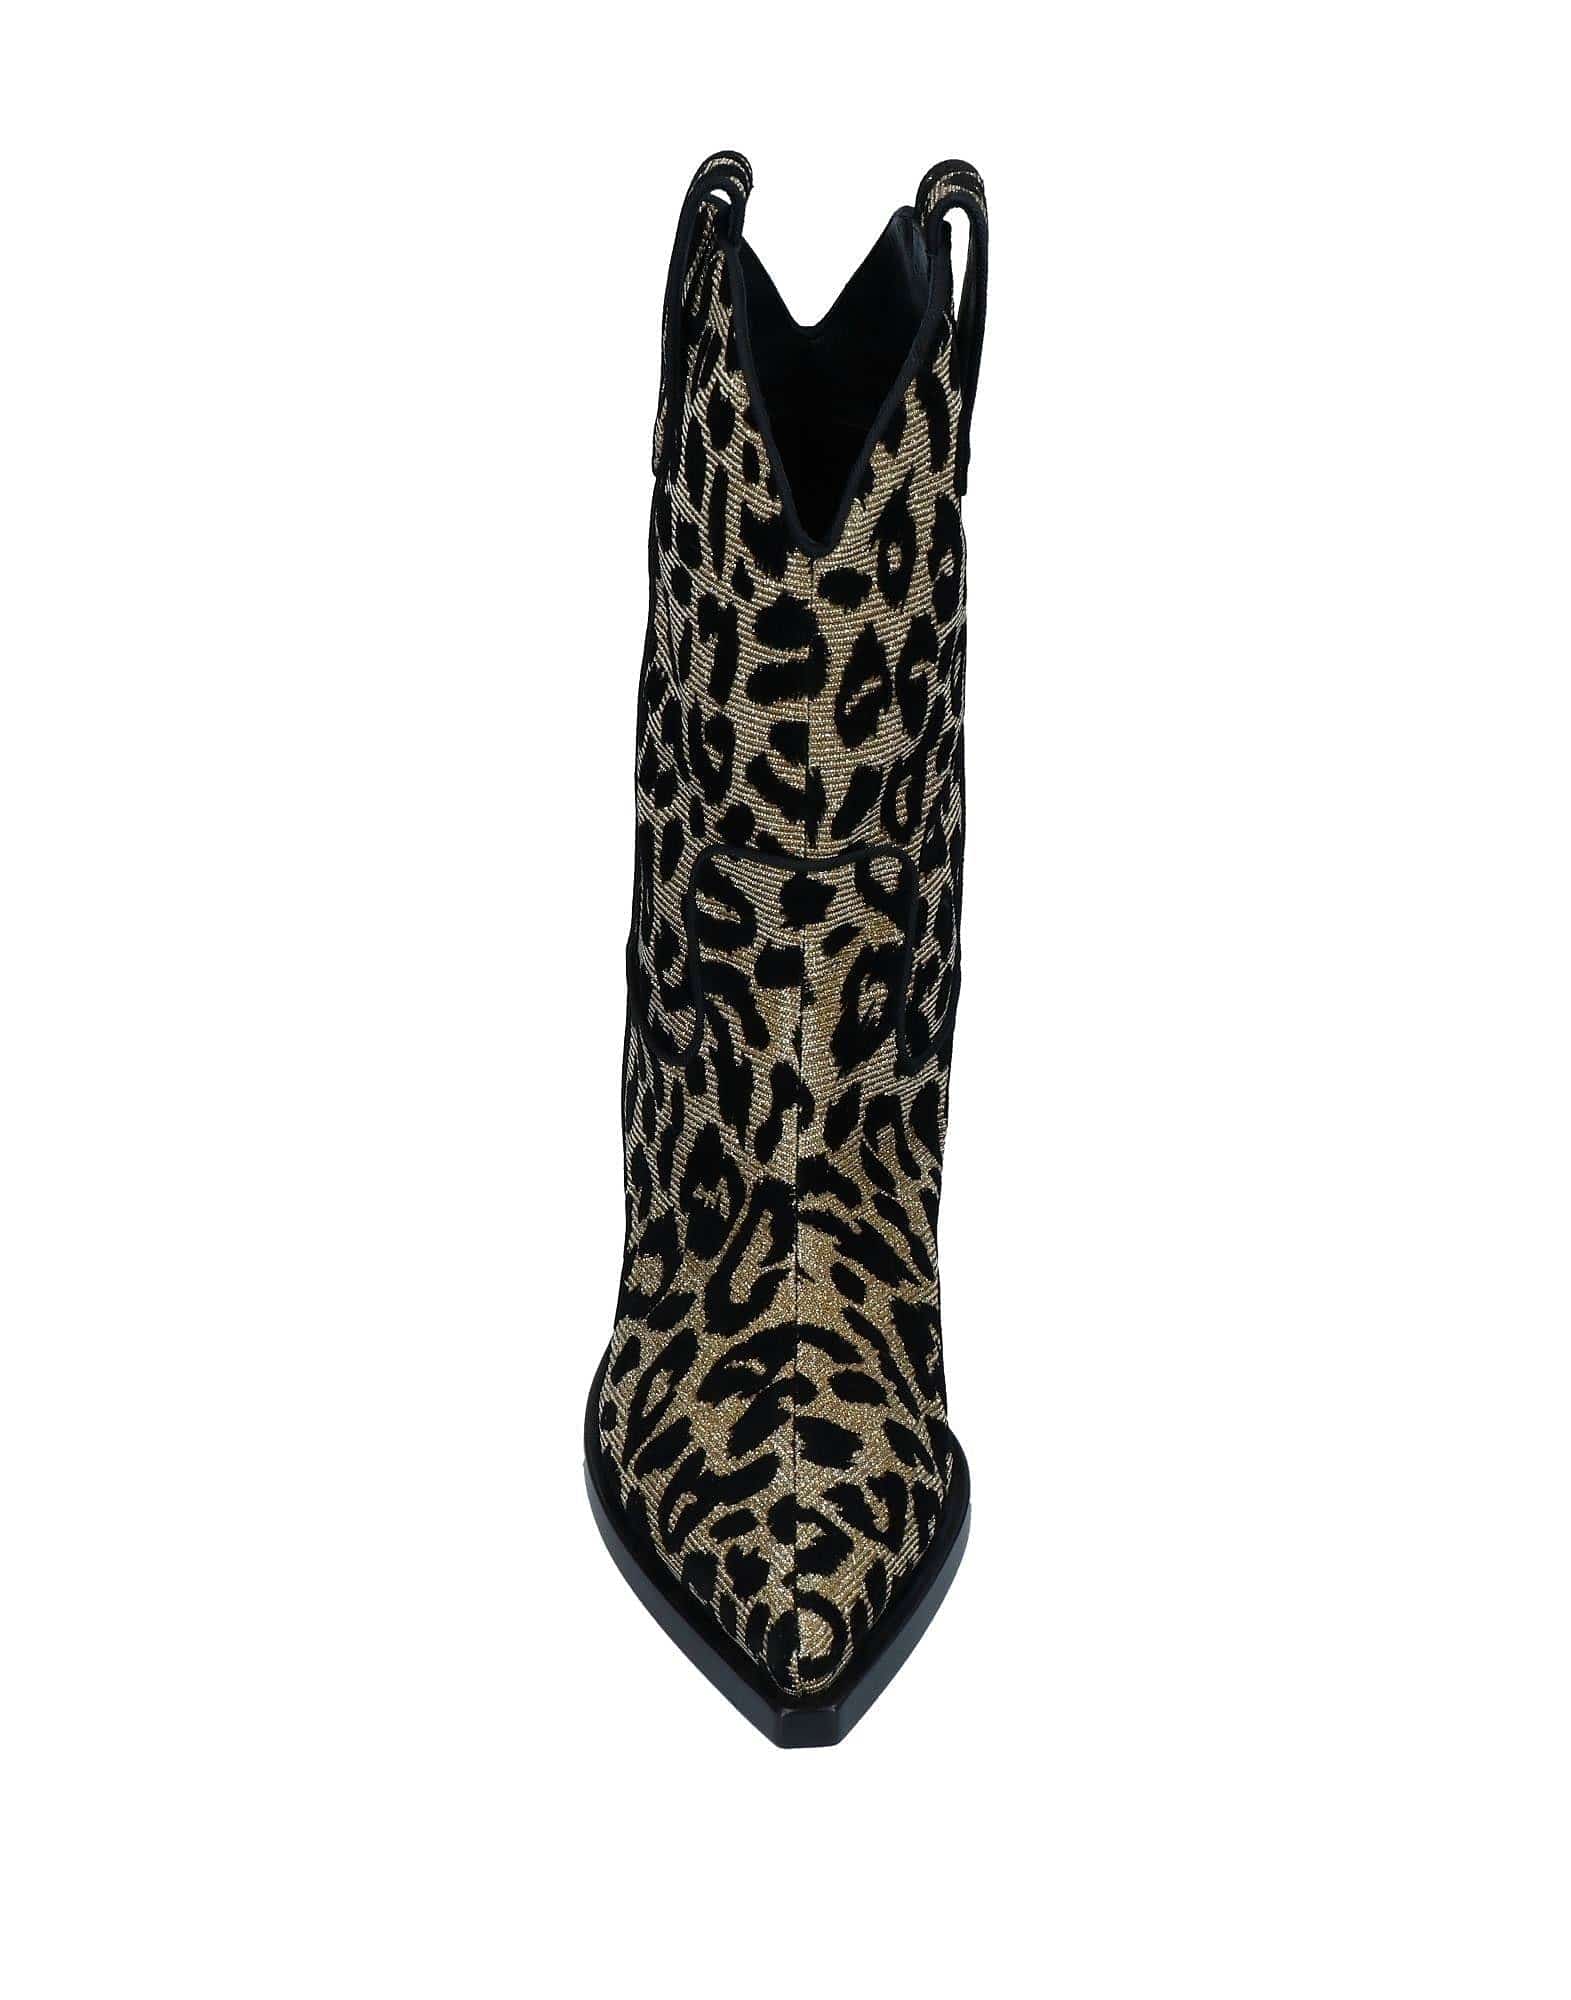 Dolce & Gabbana Texan 40 Leopard Cowboy Boots